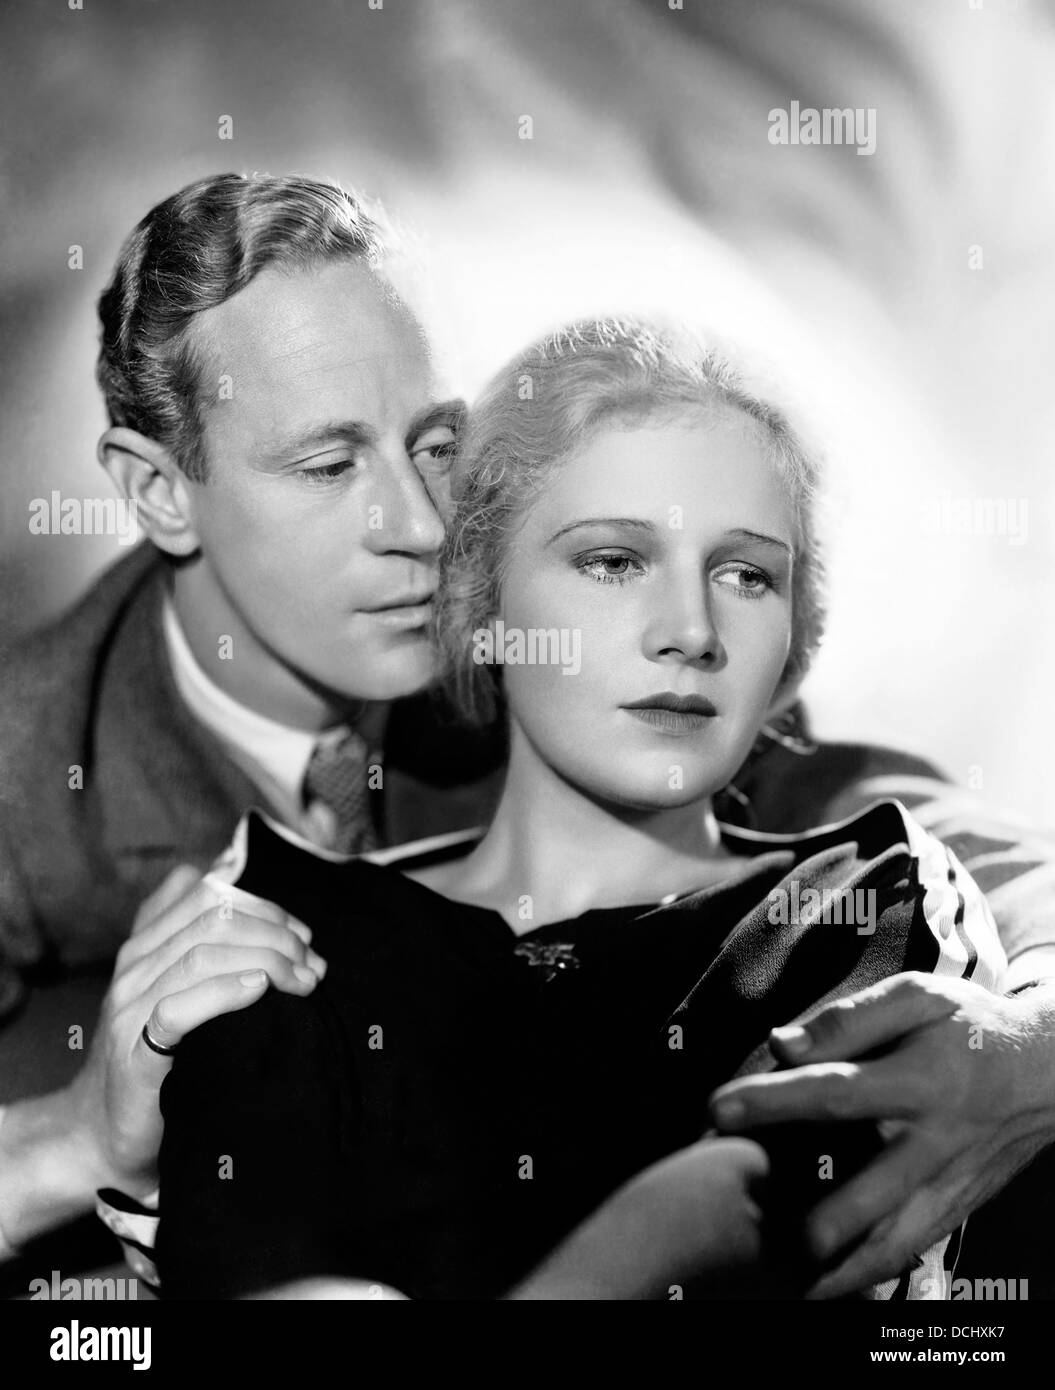 Le royaume animal 1932 RKO Radio Pictures film avec Leslie Howard et Ann Harding Banque D'Images